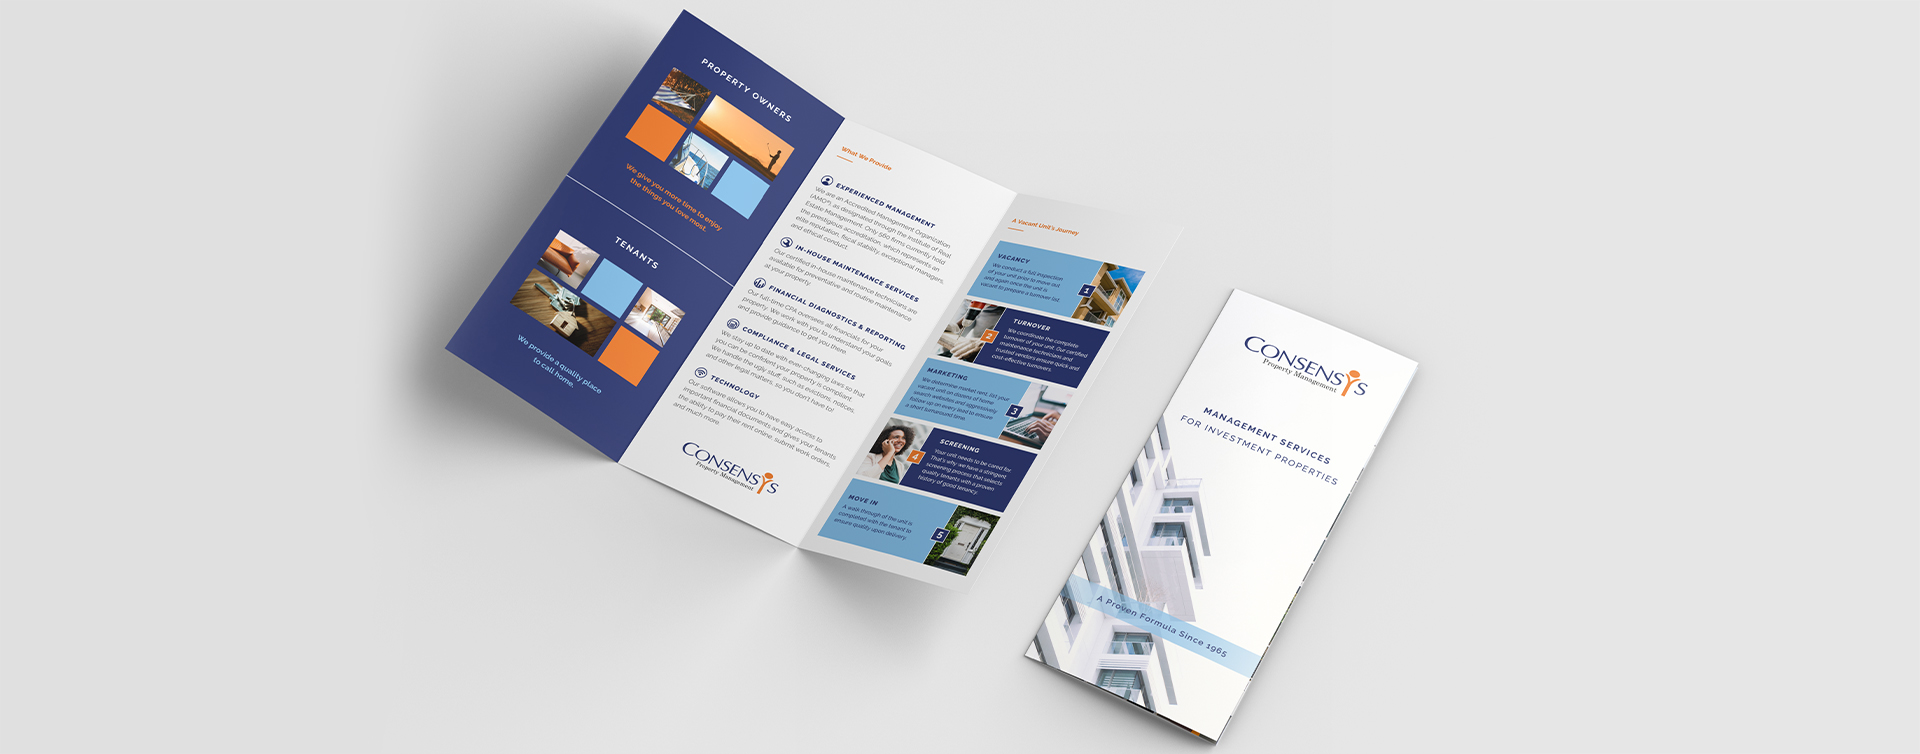 ConsensYs tri-fold brochure design mockup